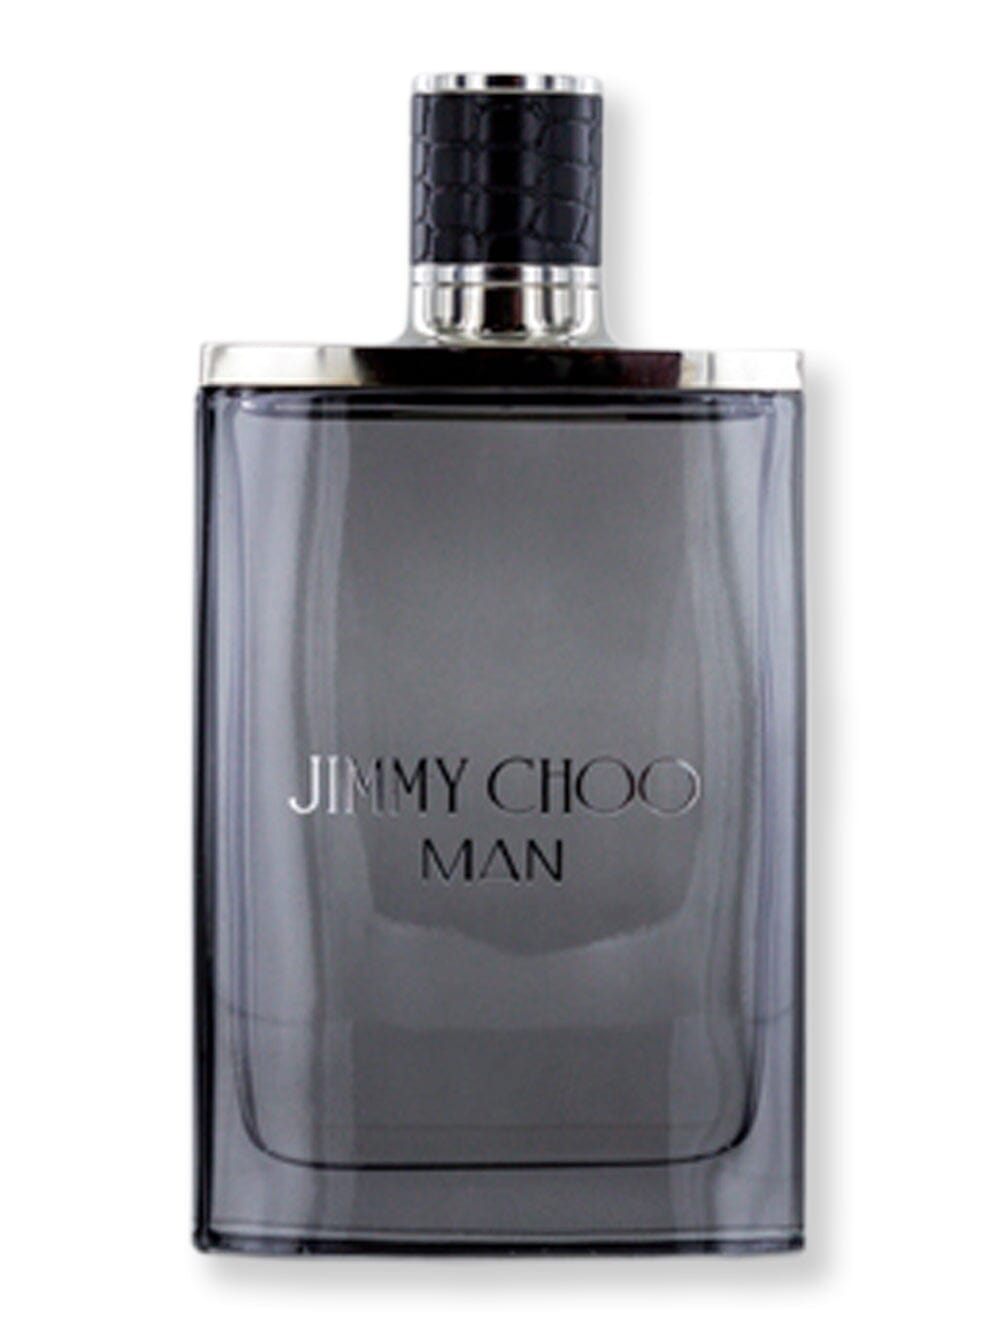 Jimmy Choo Jimmy Choo Man EDT Spray Tester 3.3 oz Perfume 